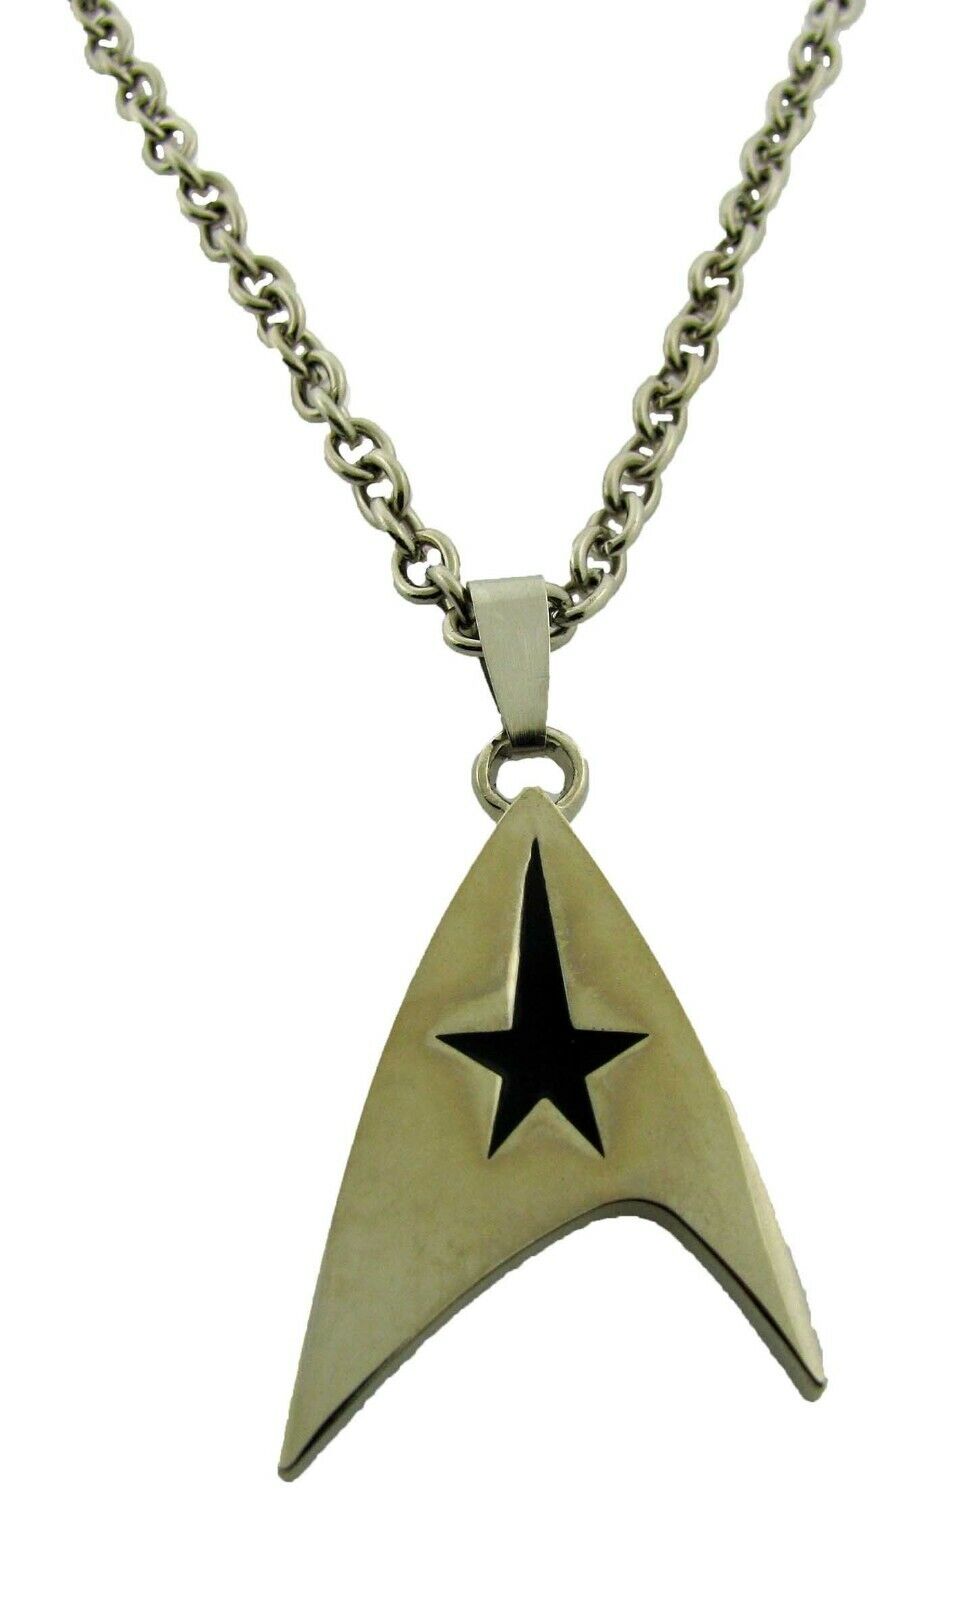 Star Trek Necklace Pendant Dog Tag Badge Silver Chrome Die-cut discontinued item